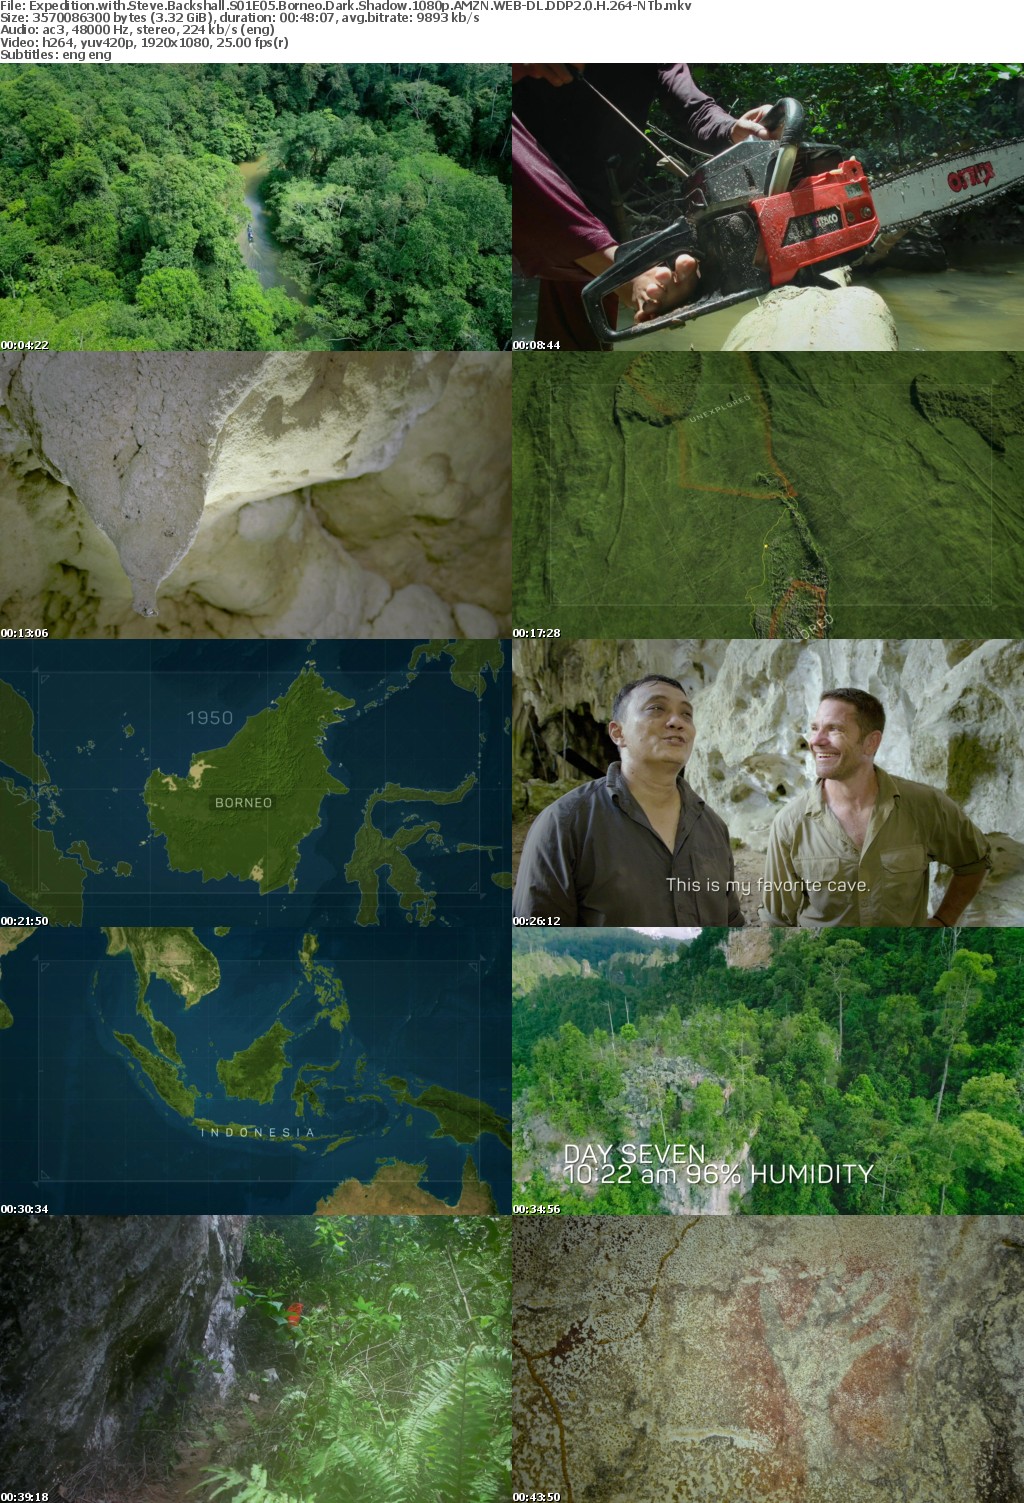 Expedition with Steve Backshall S01E05 Borneo Dark Shadow 1080p AMZN WEB-DL DDP2 0 H 264-NTb